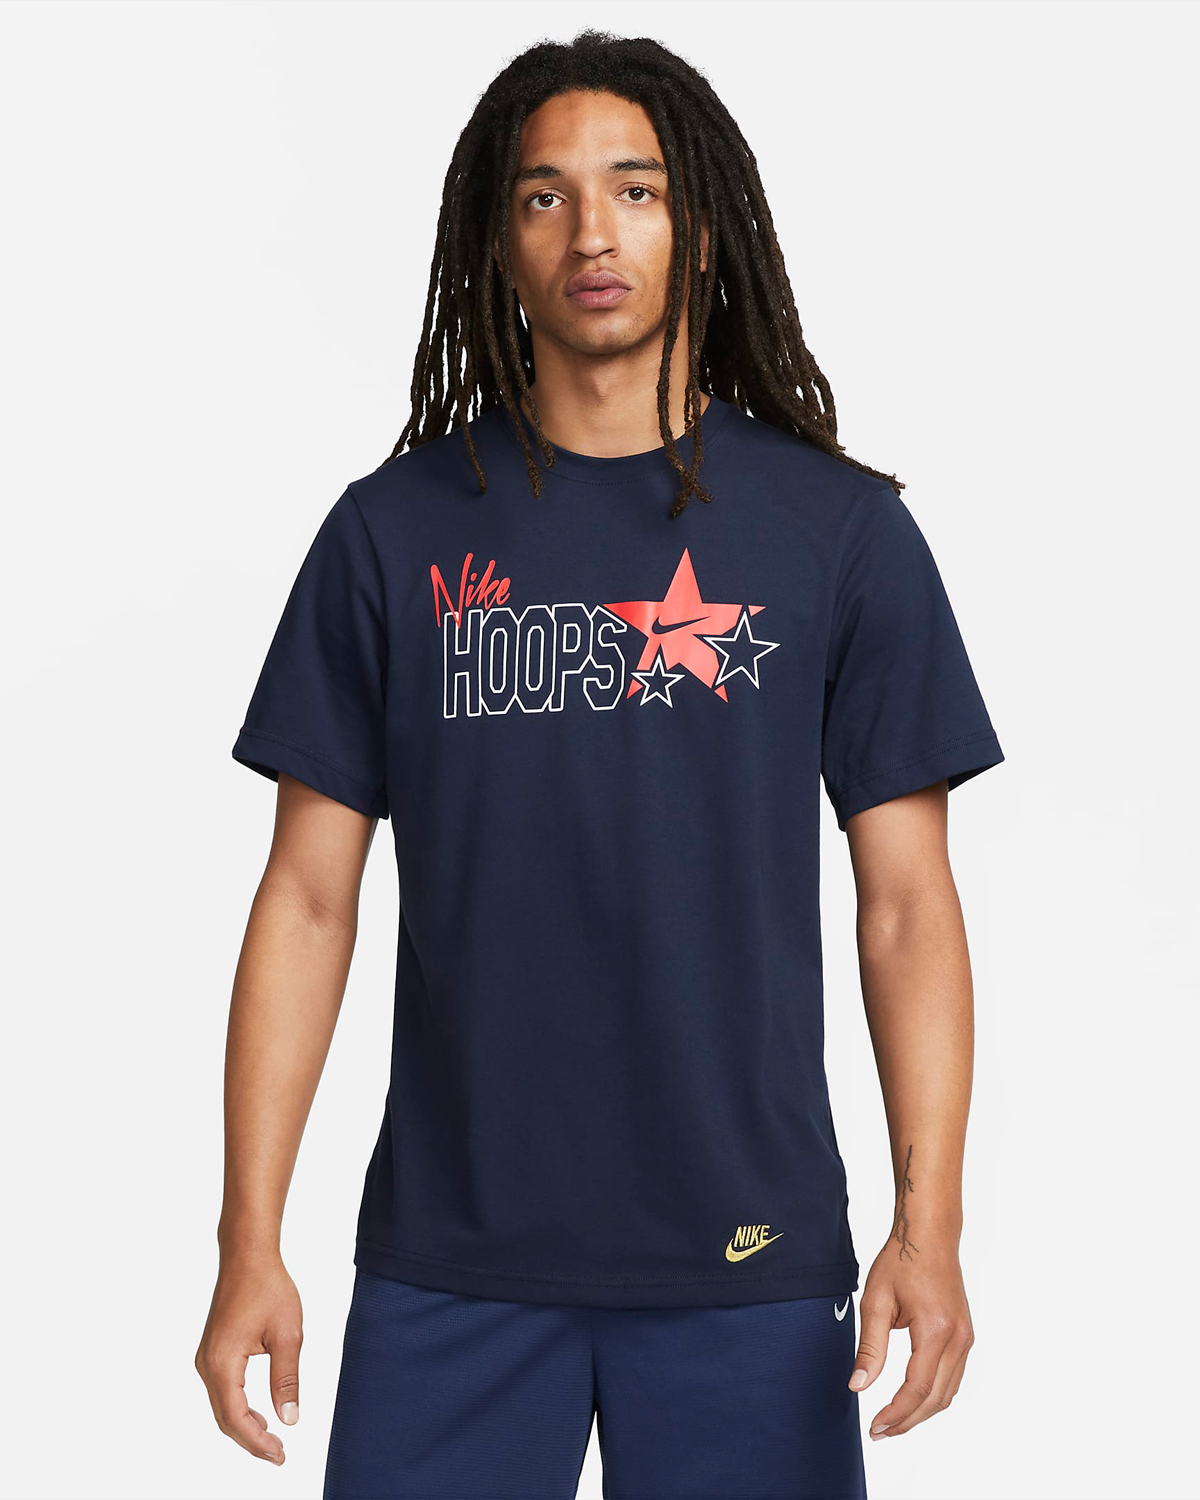 Nike-Hoops-Basketball-T-Shirt-Obsidian